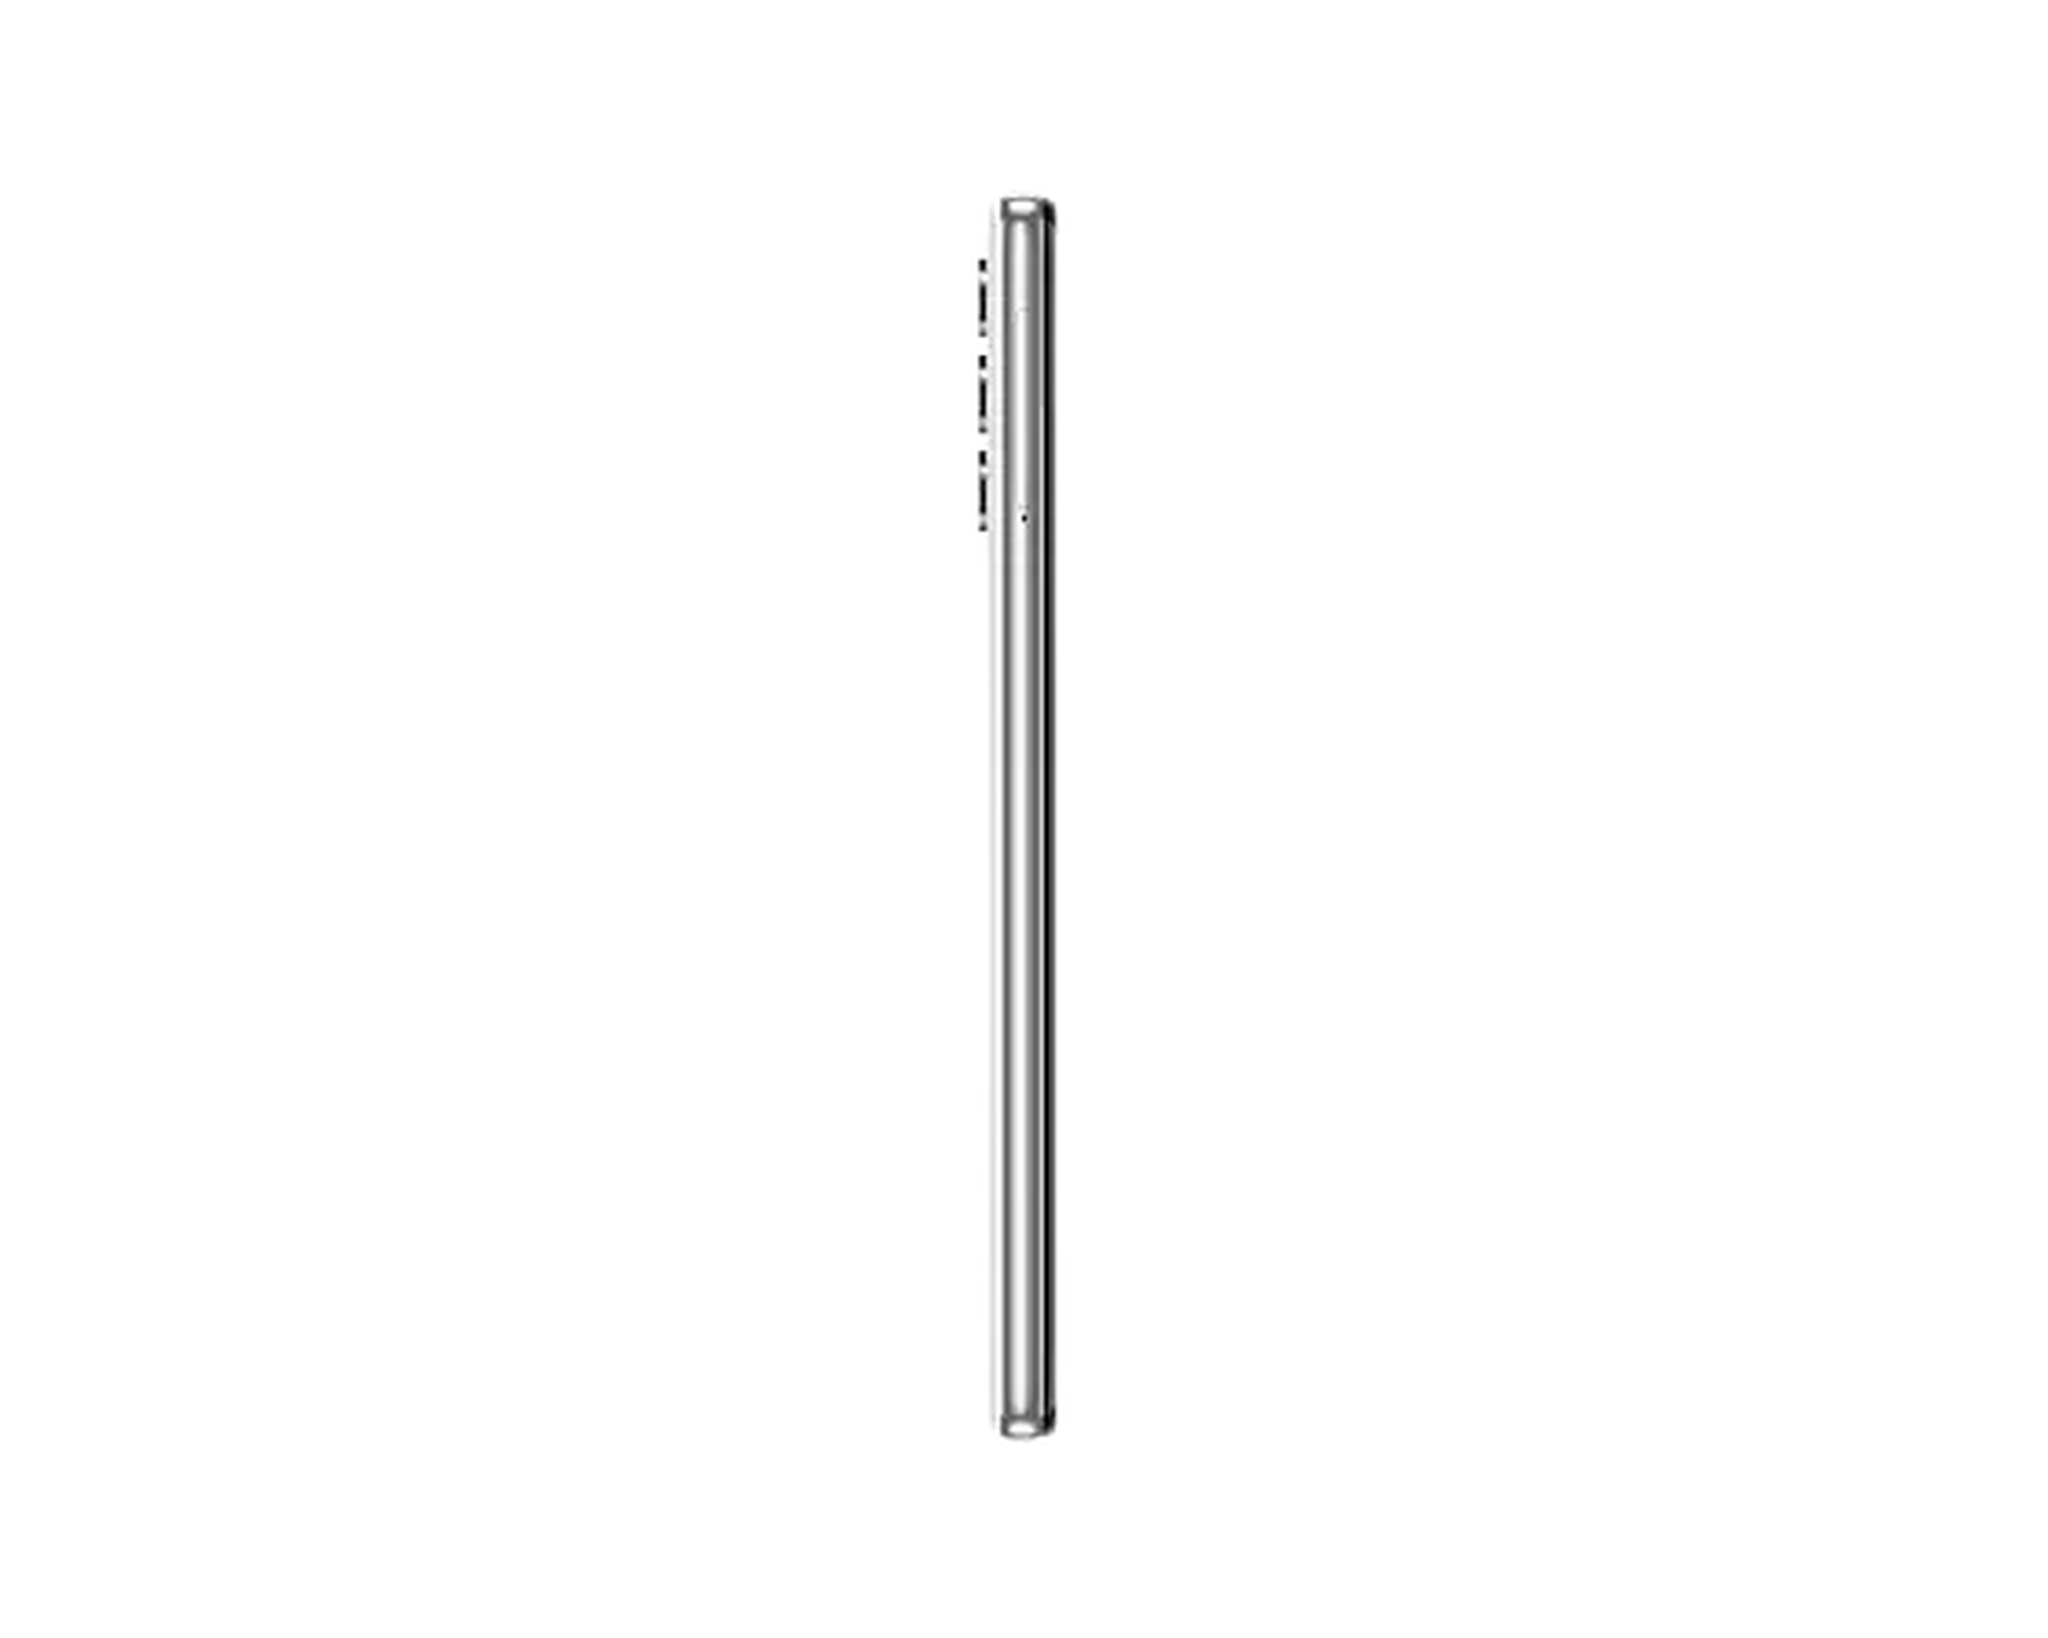 Samsung Galaxy A32 5G 128GB Phone - Awesome White